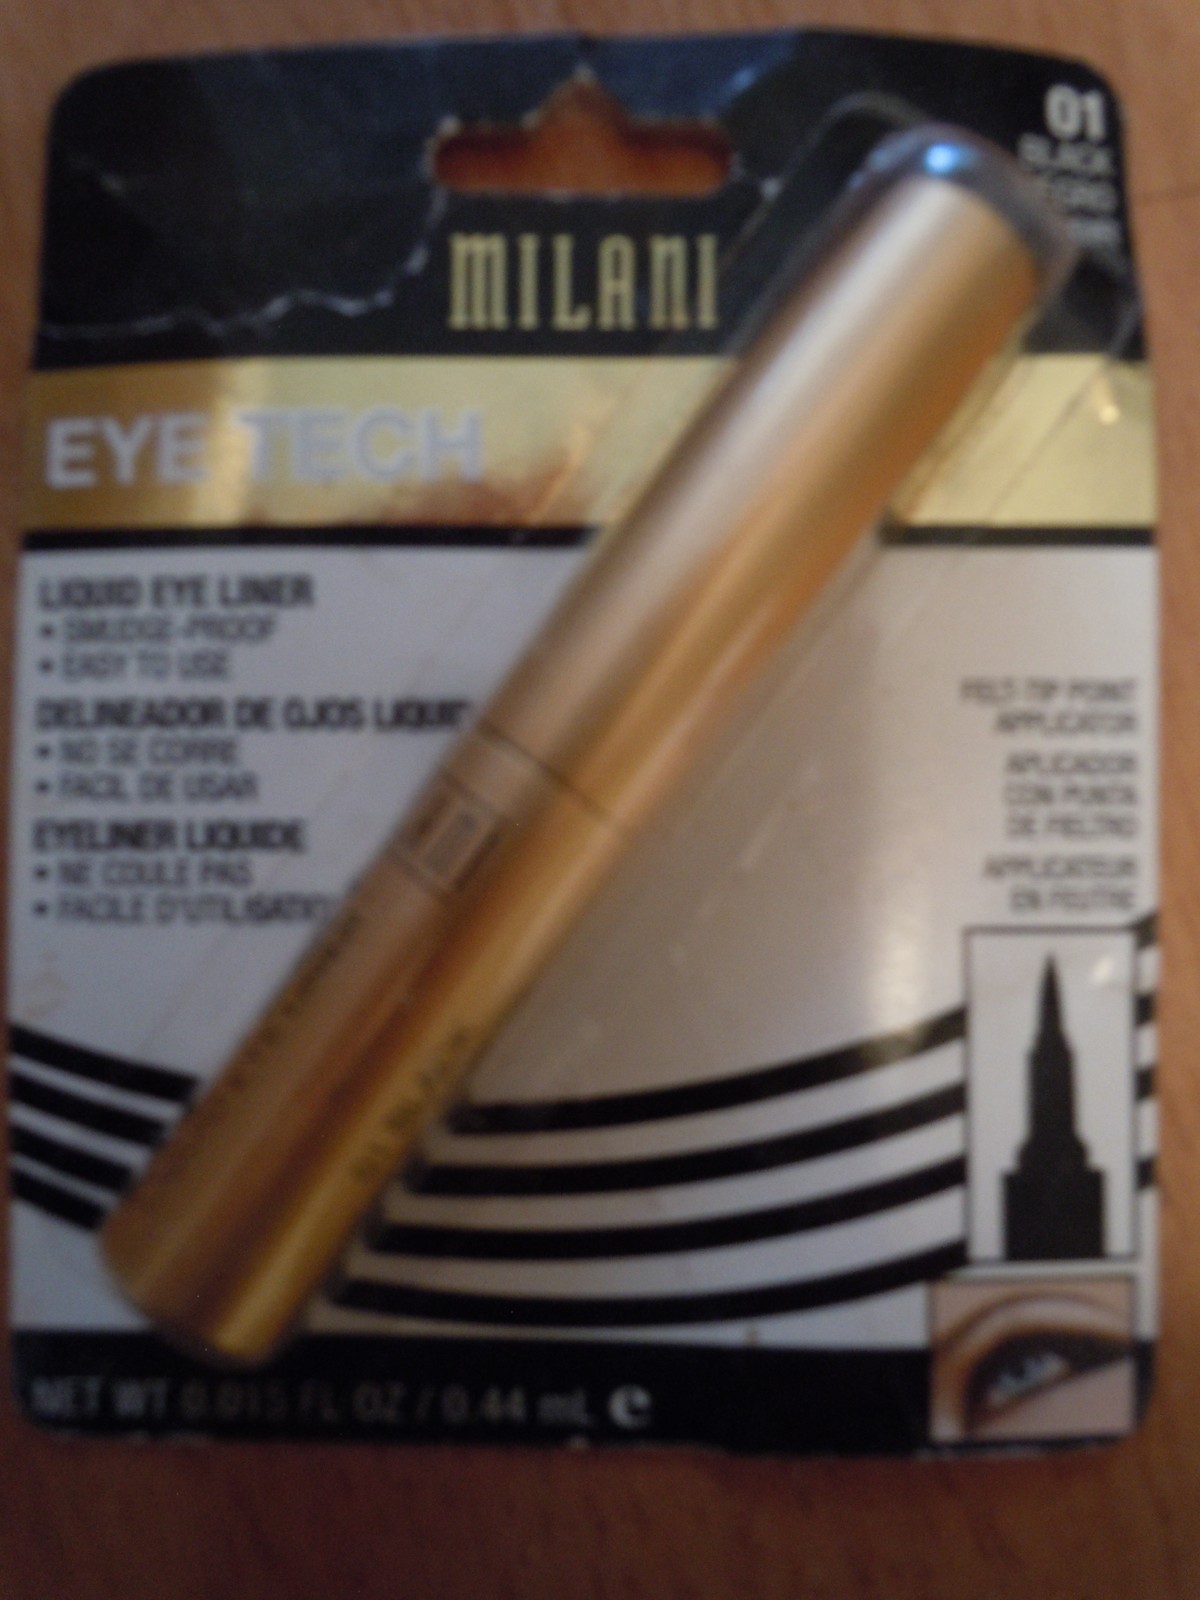 Milani Eye Tech Liquid Eye Liner 01 Black New In Pkg - $5.99